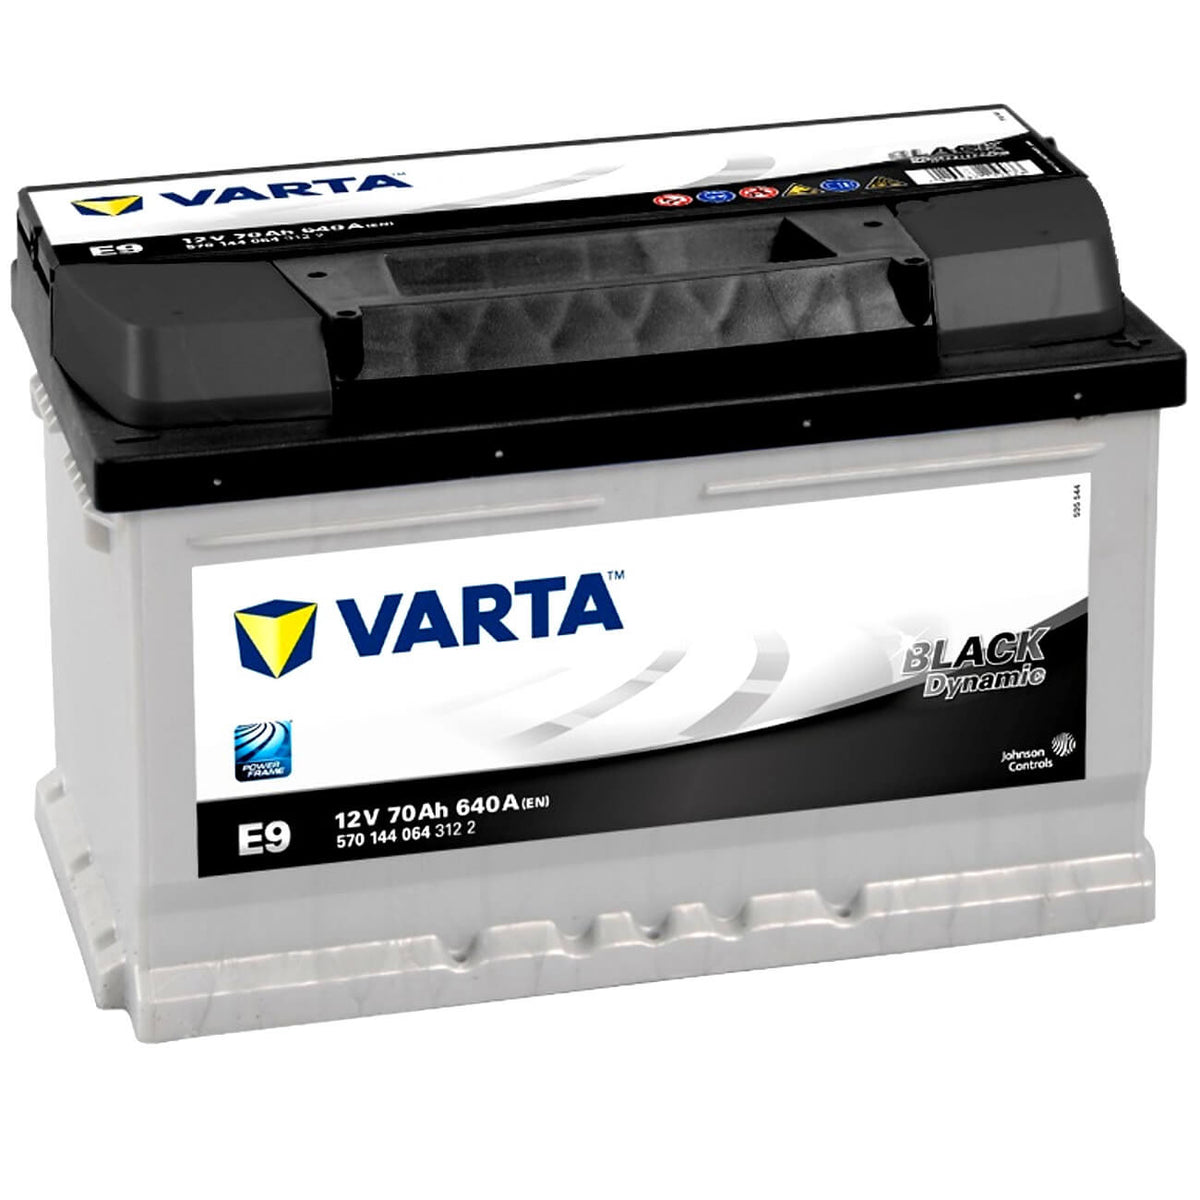 Varta E9 Black Dynamic 12V 70Ah 640A/EN